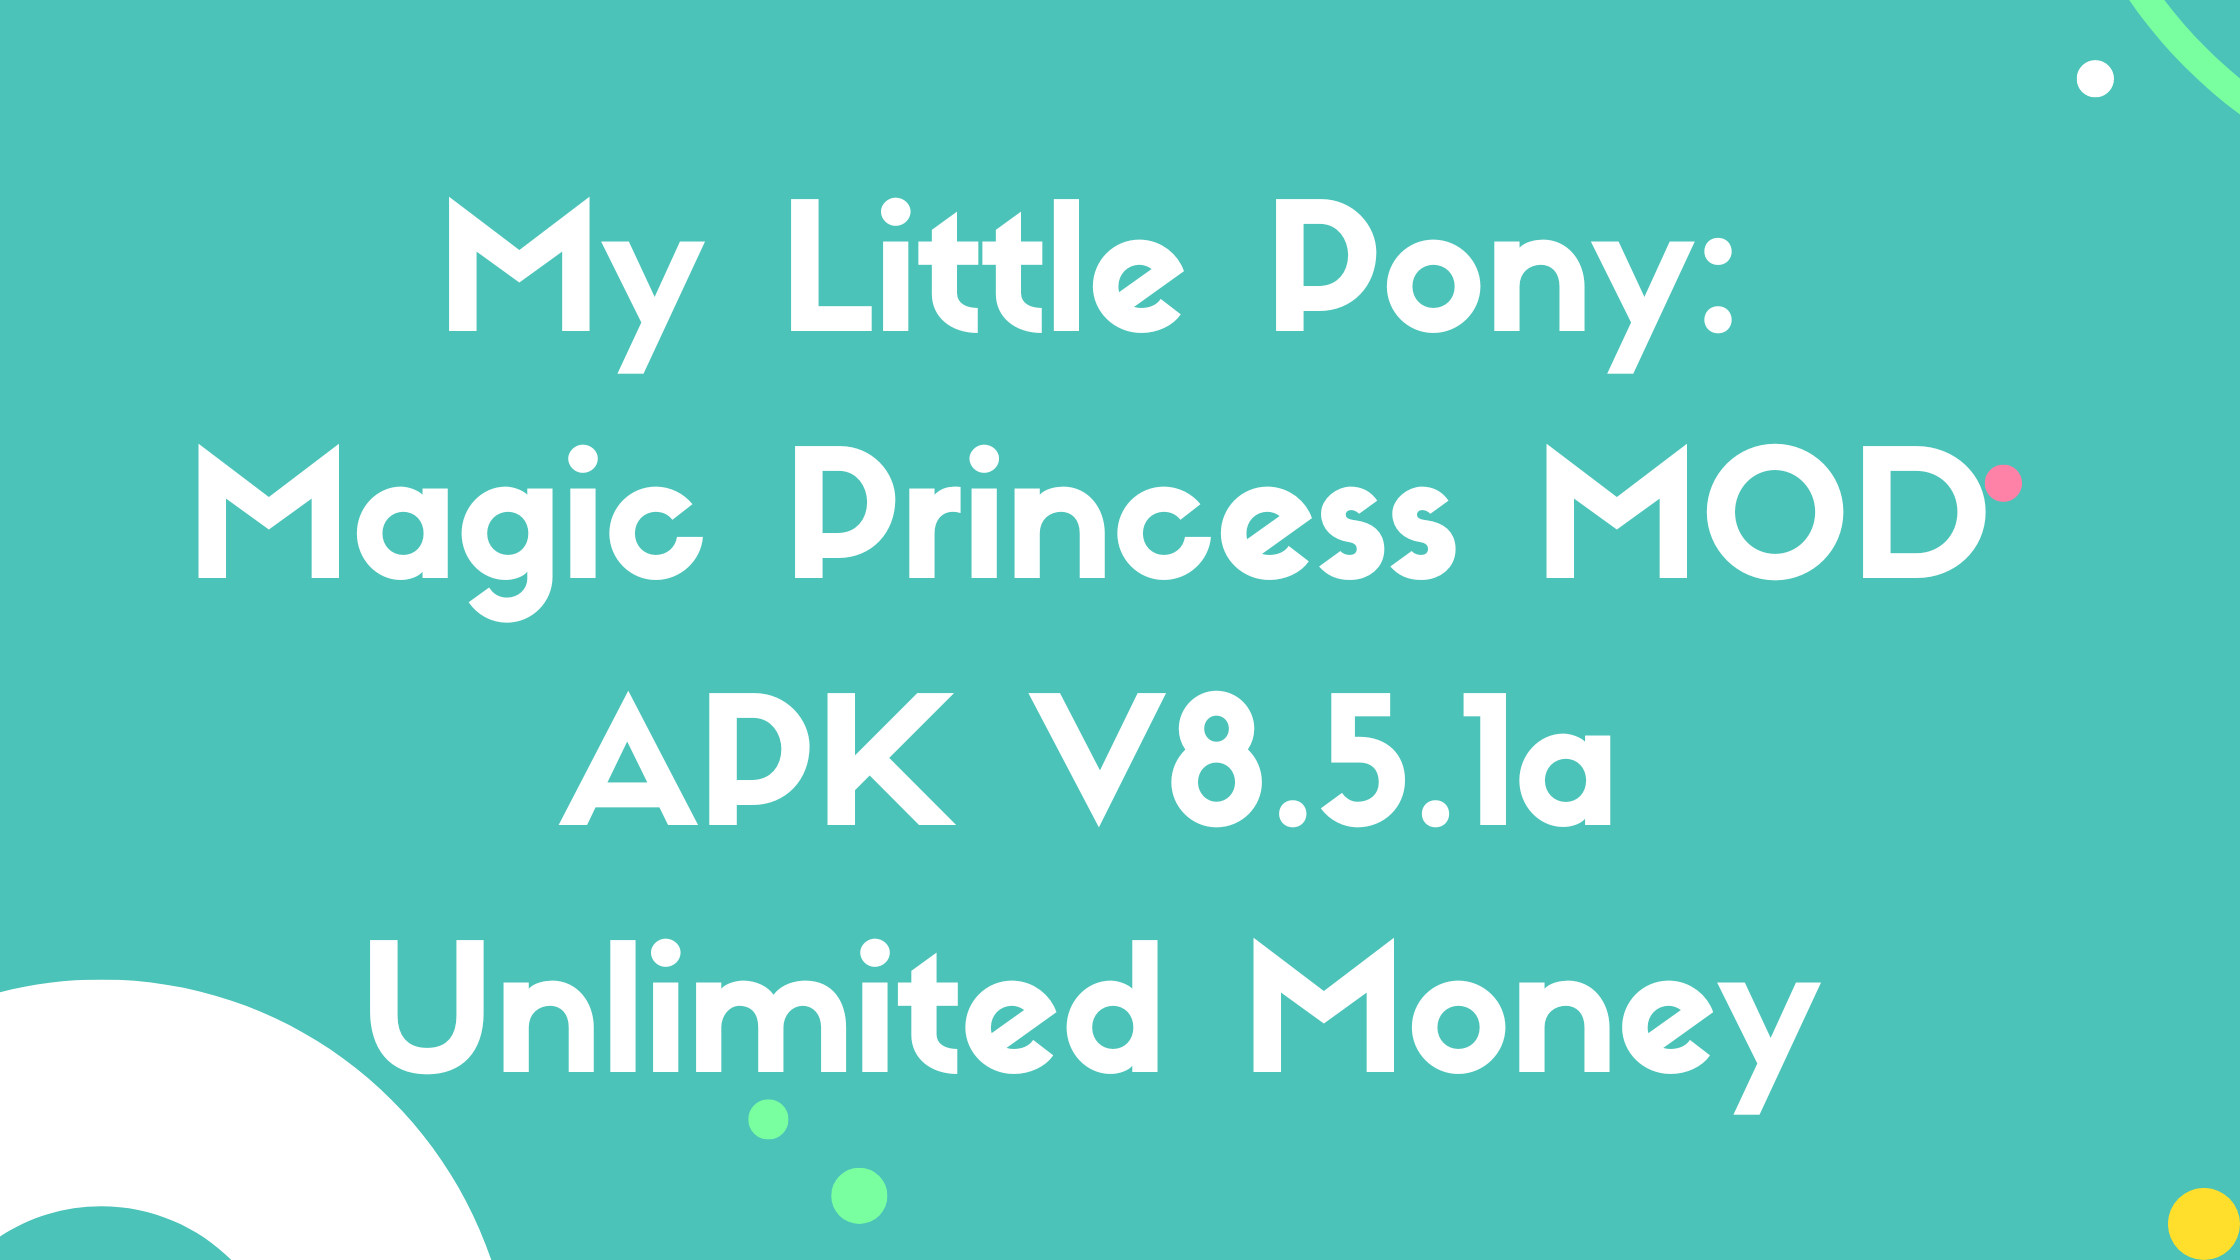 My Little Pony: Magic Princess MOD APK V8.5.1a Unlimited Money